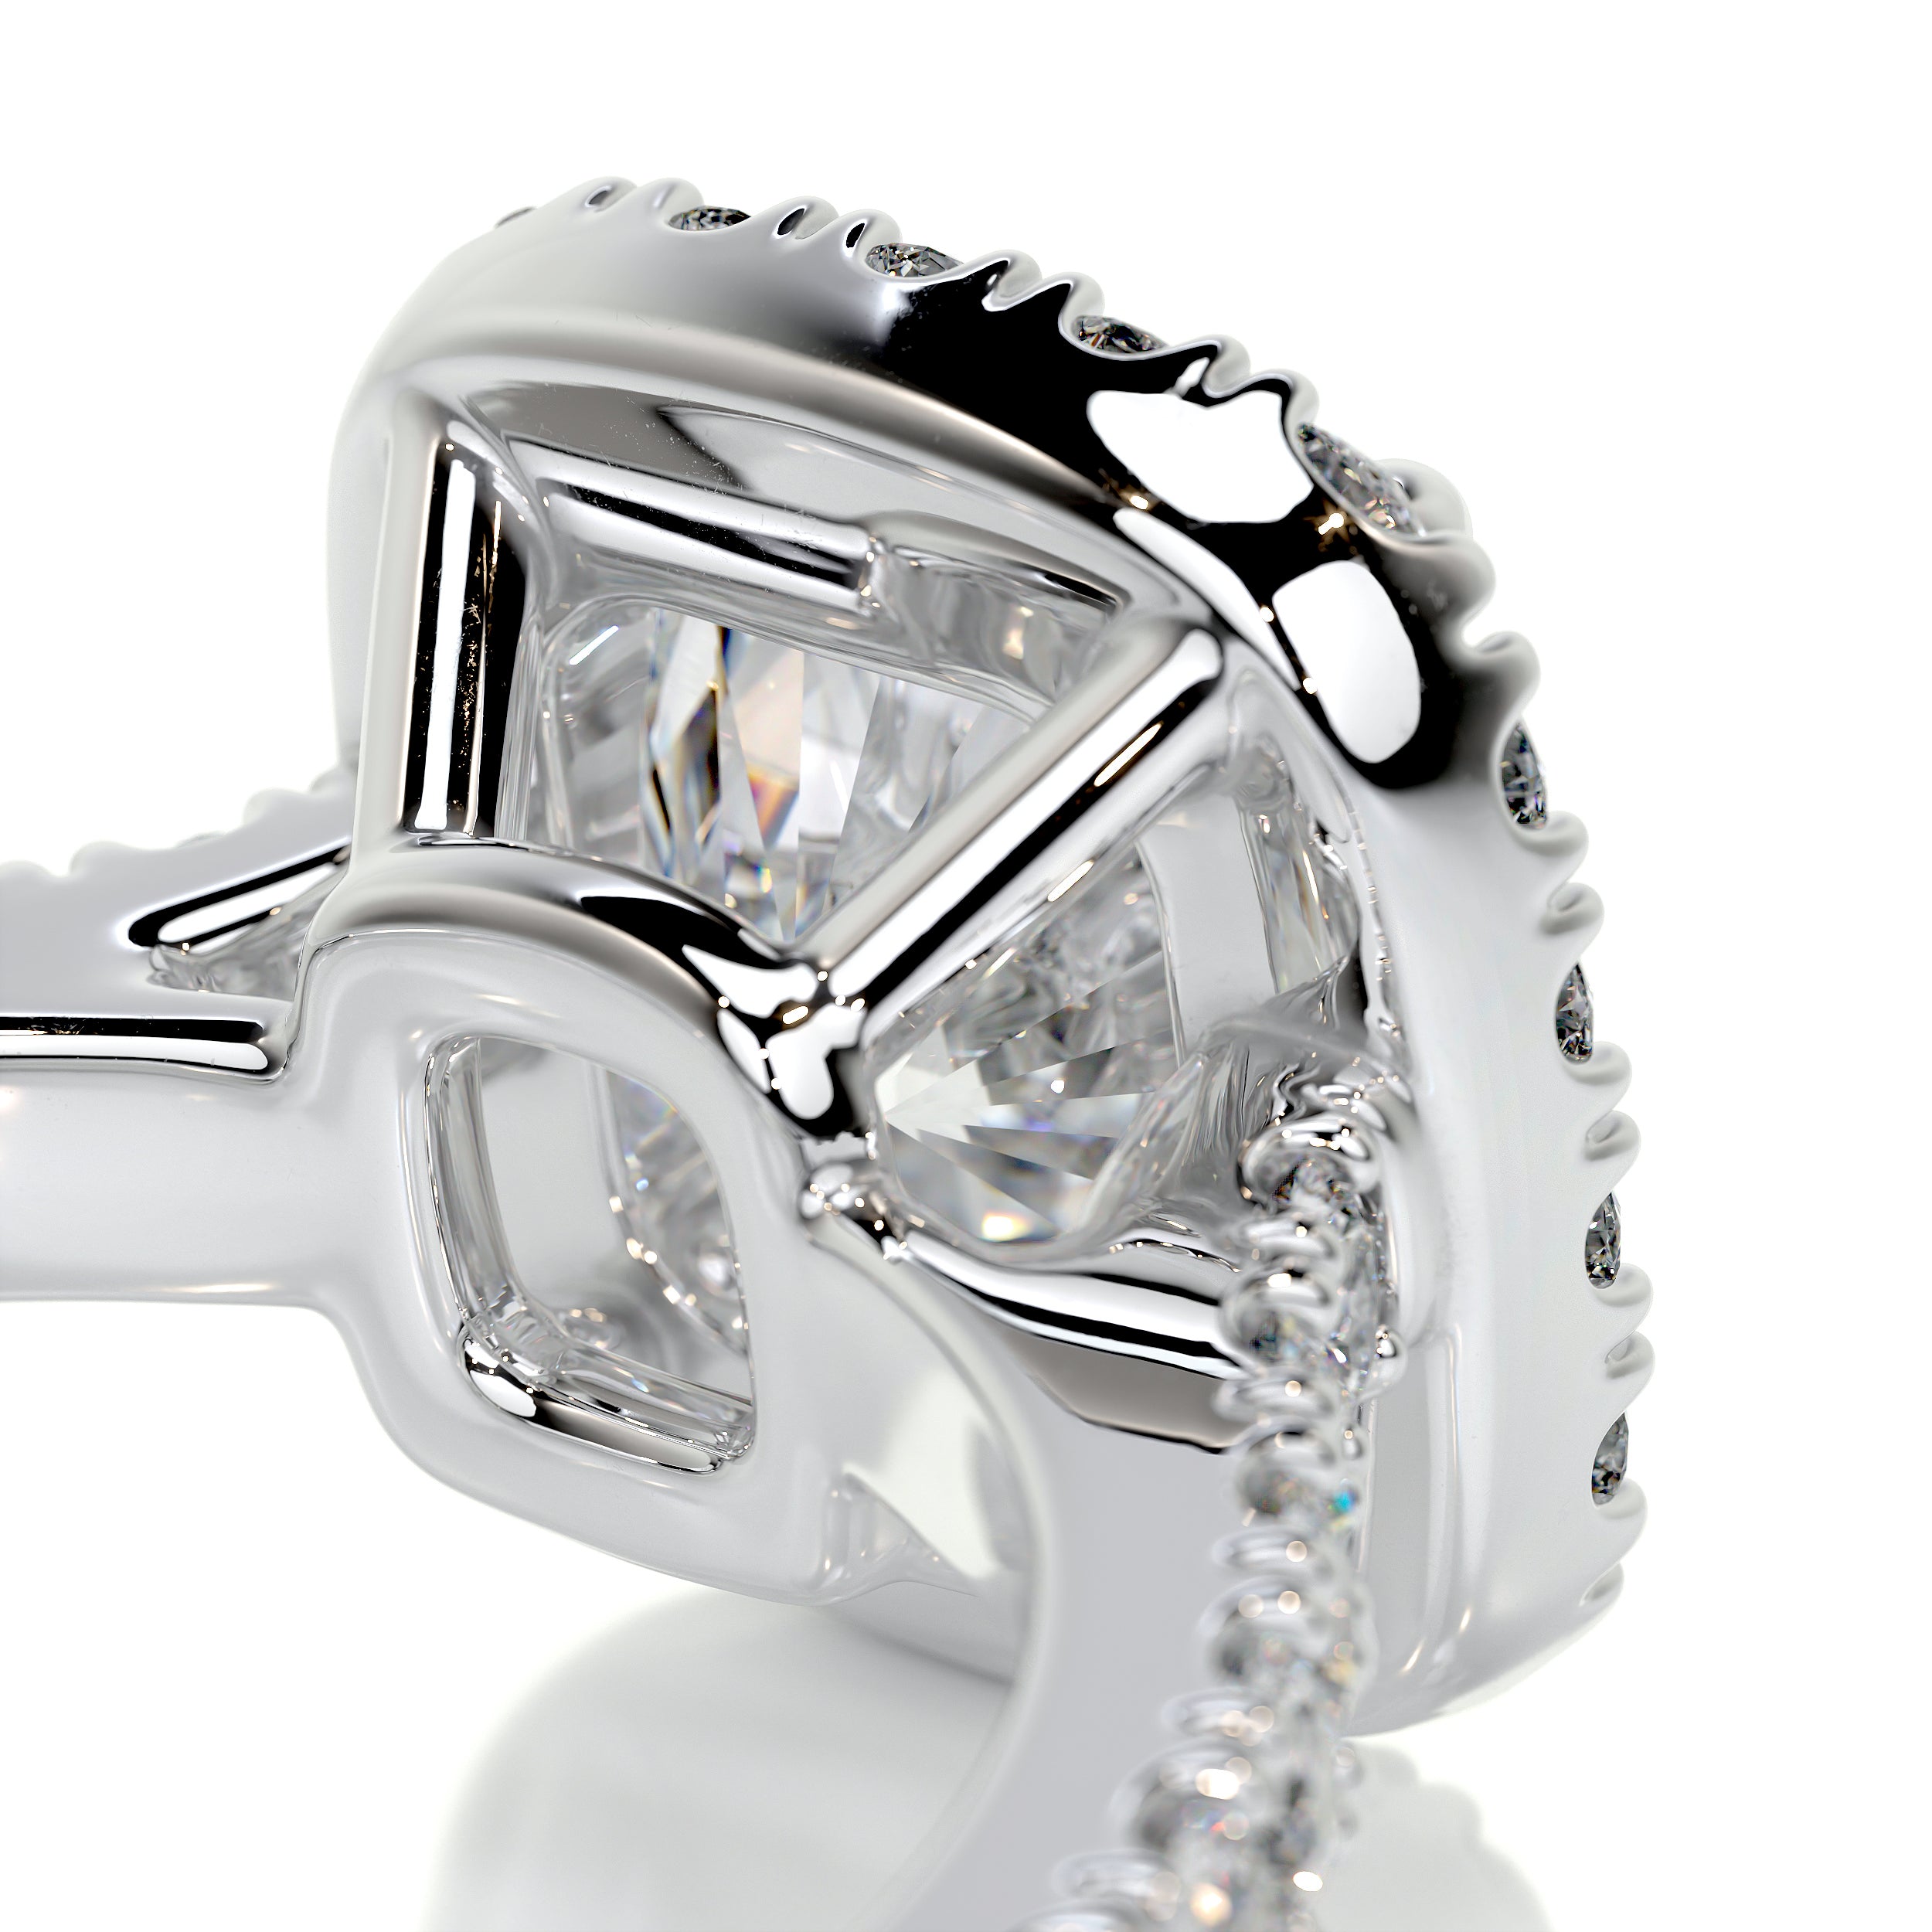 Celeste Diamond Engagement Ring   (2 Carat) -Platinum